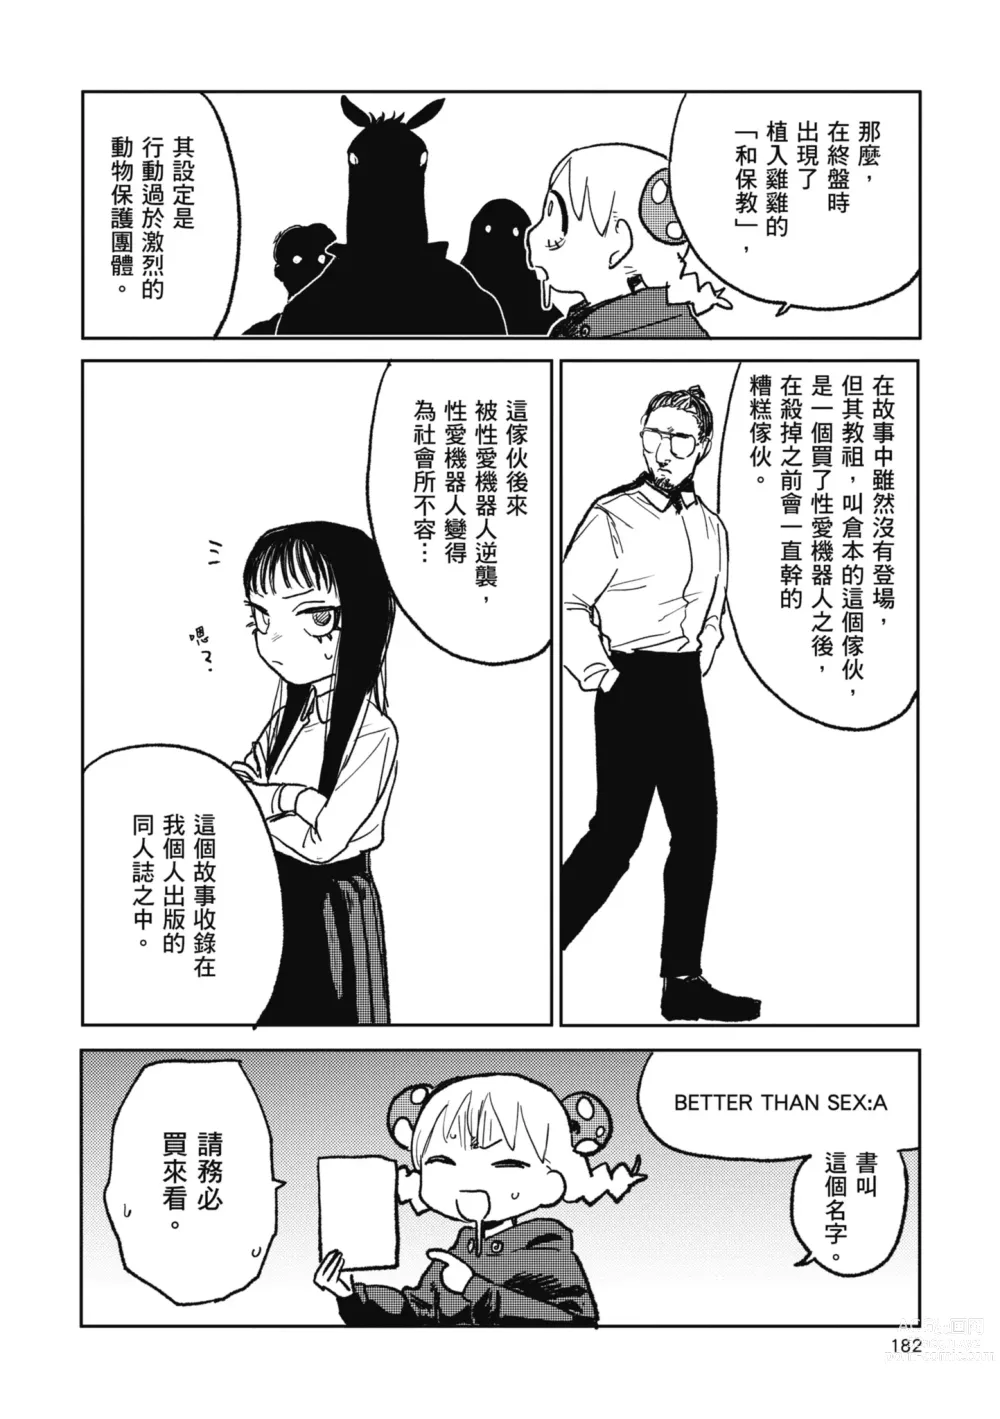 Page 184 of manga BETTER THAN SEX